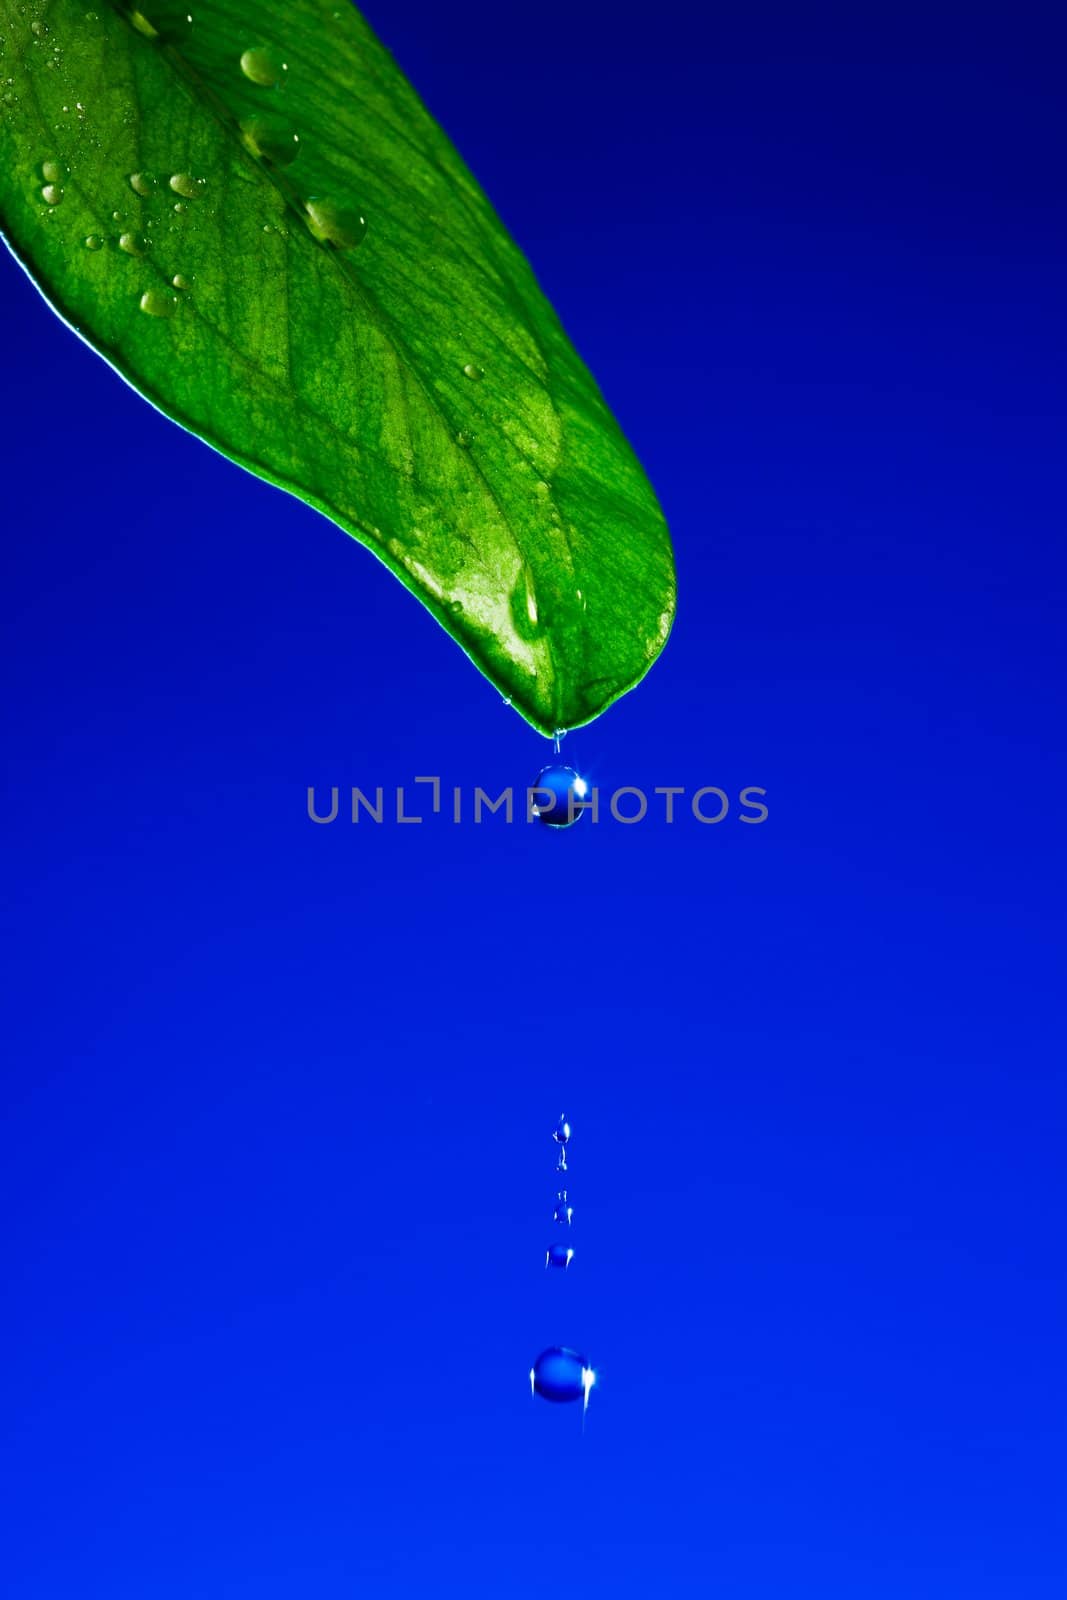 Green leaf close up on a dark blue background
